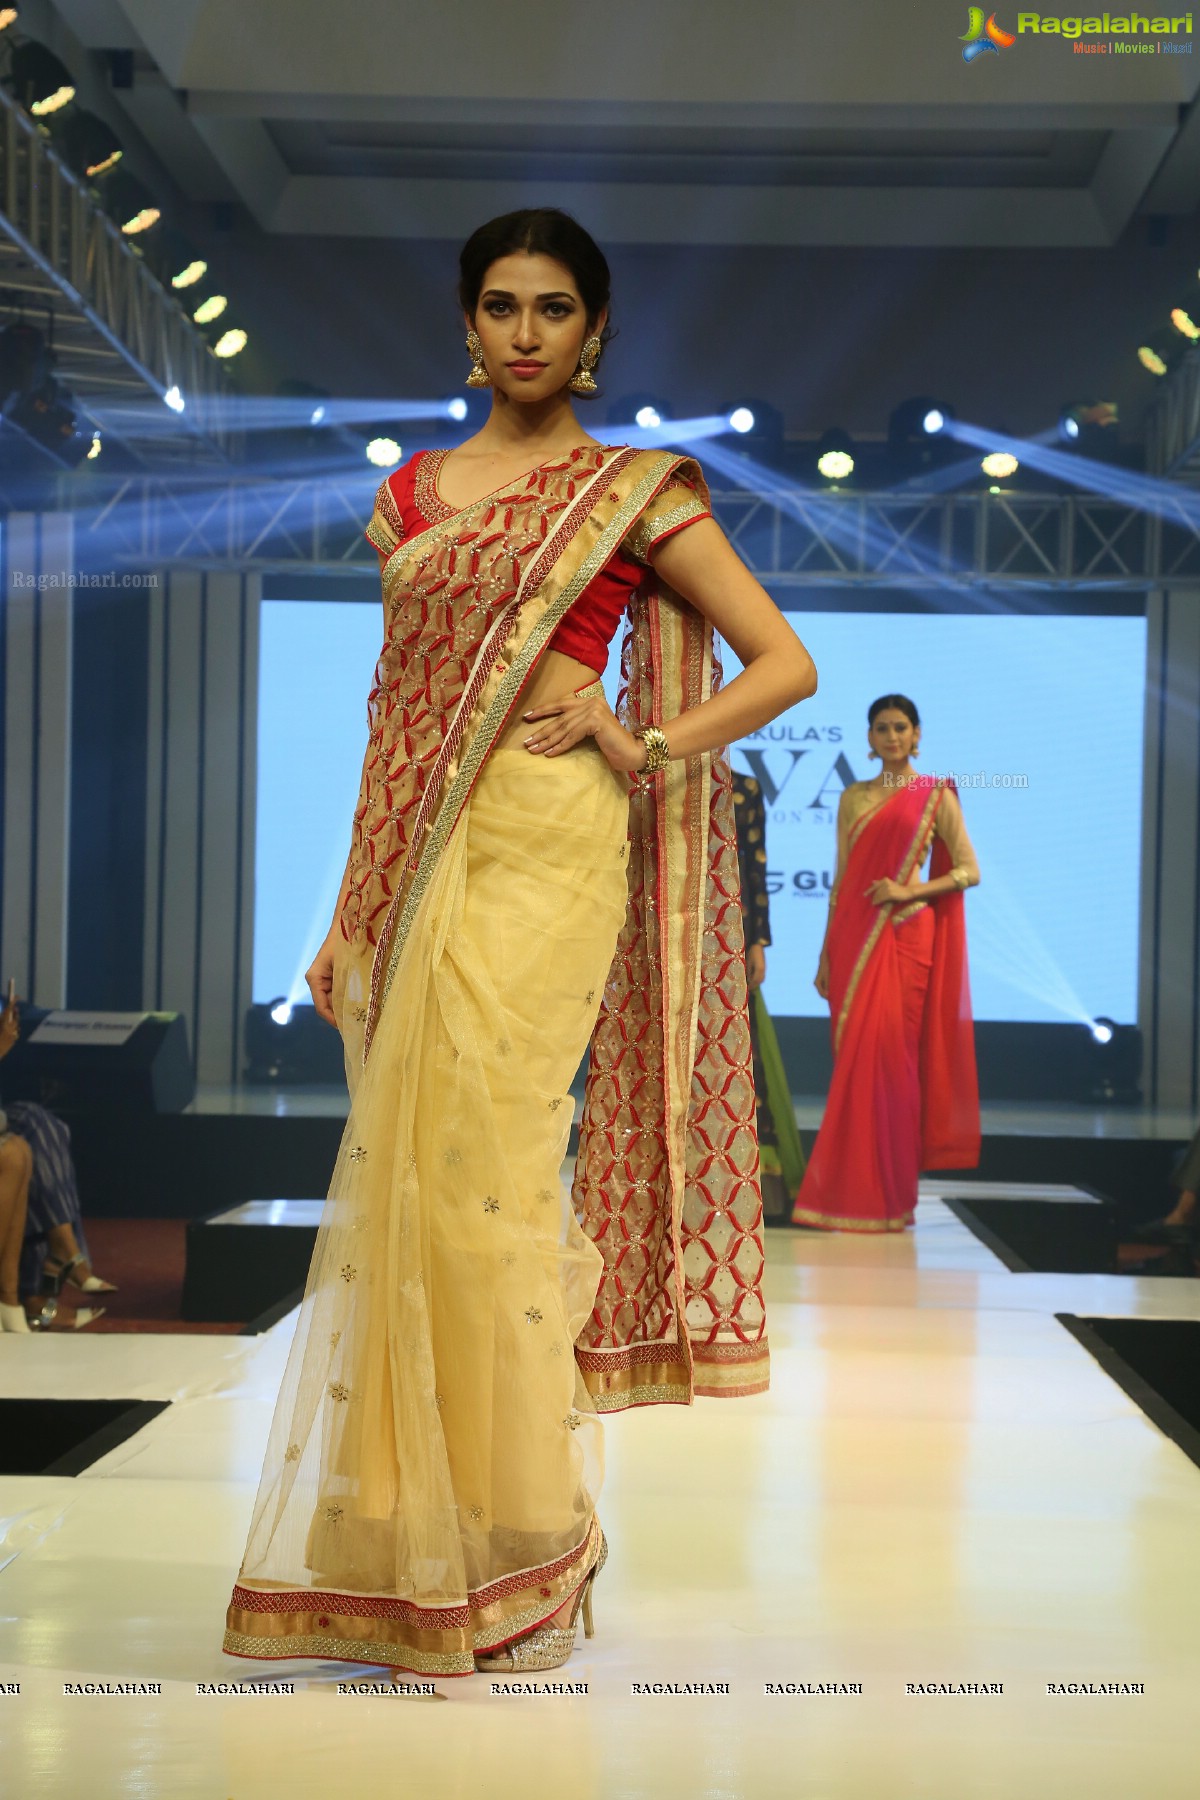 Sarva - The Complete Fashion Show at Sheraton Hotel, Hyderabad